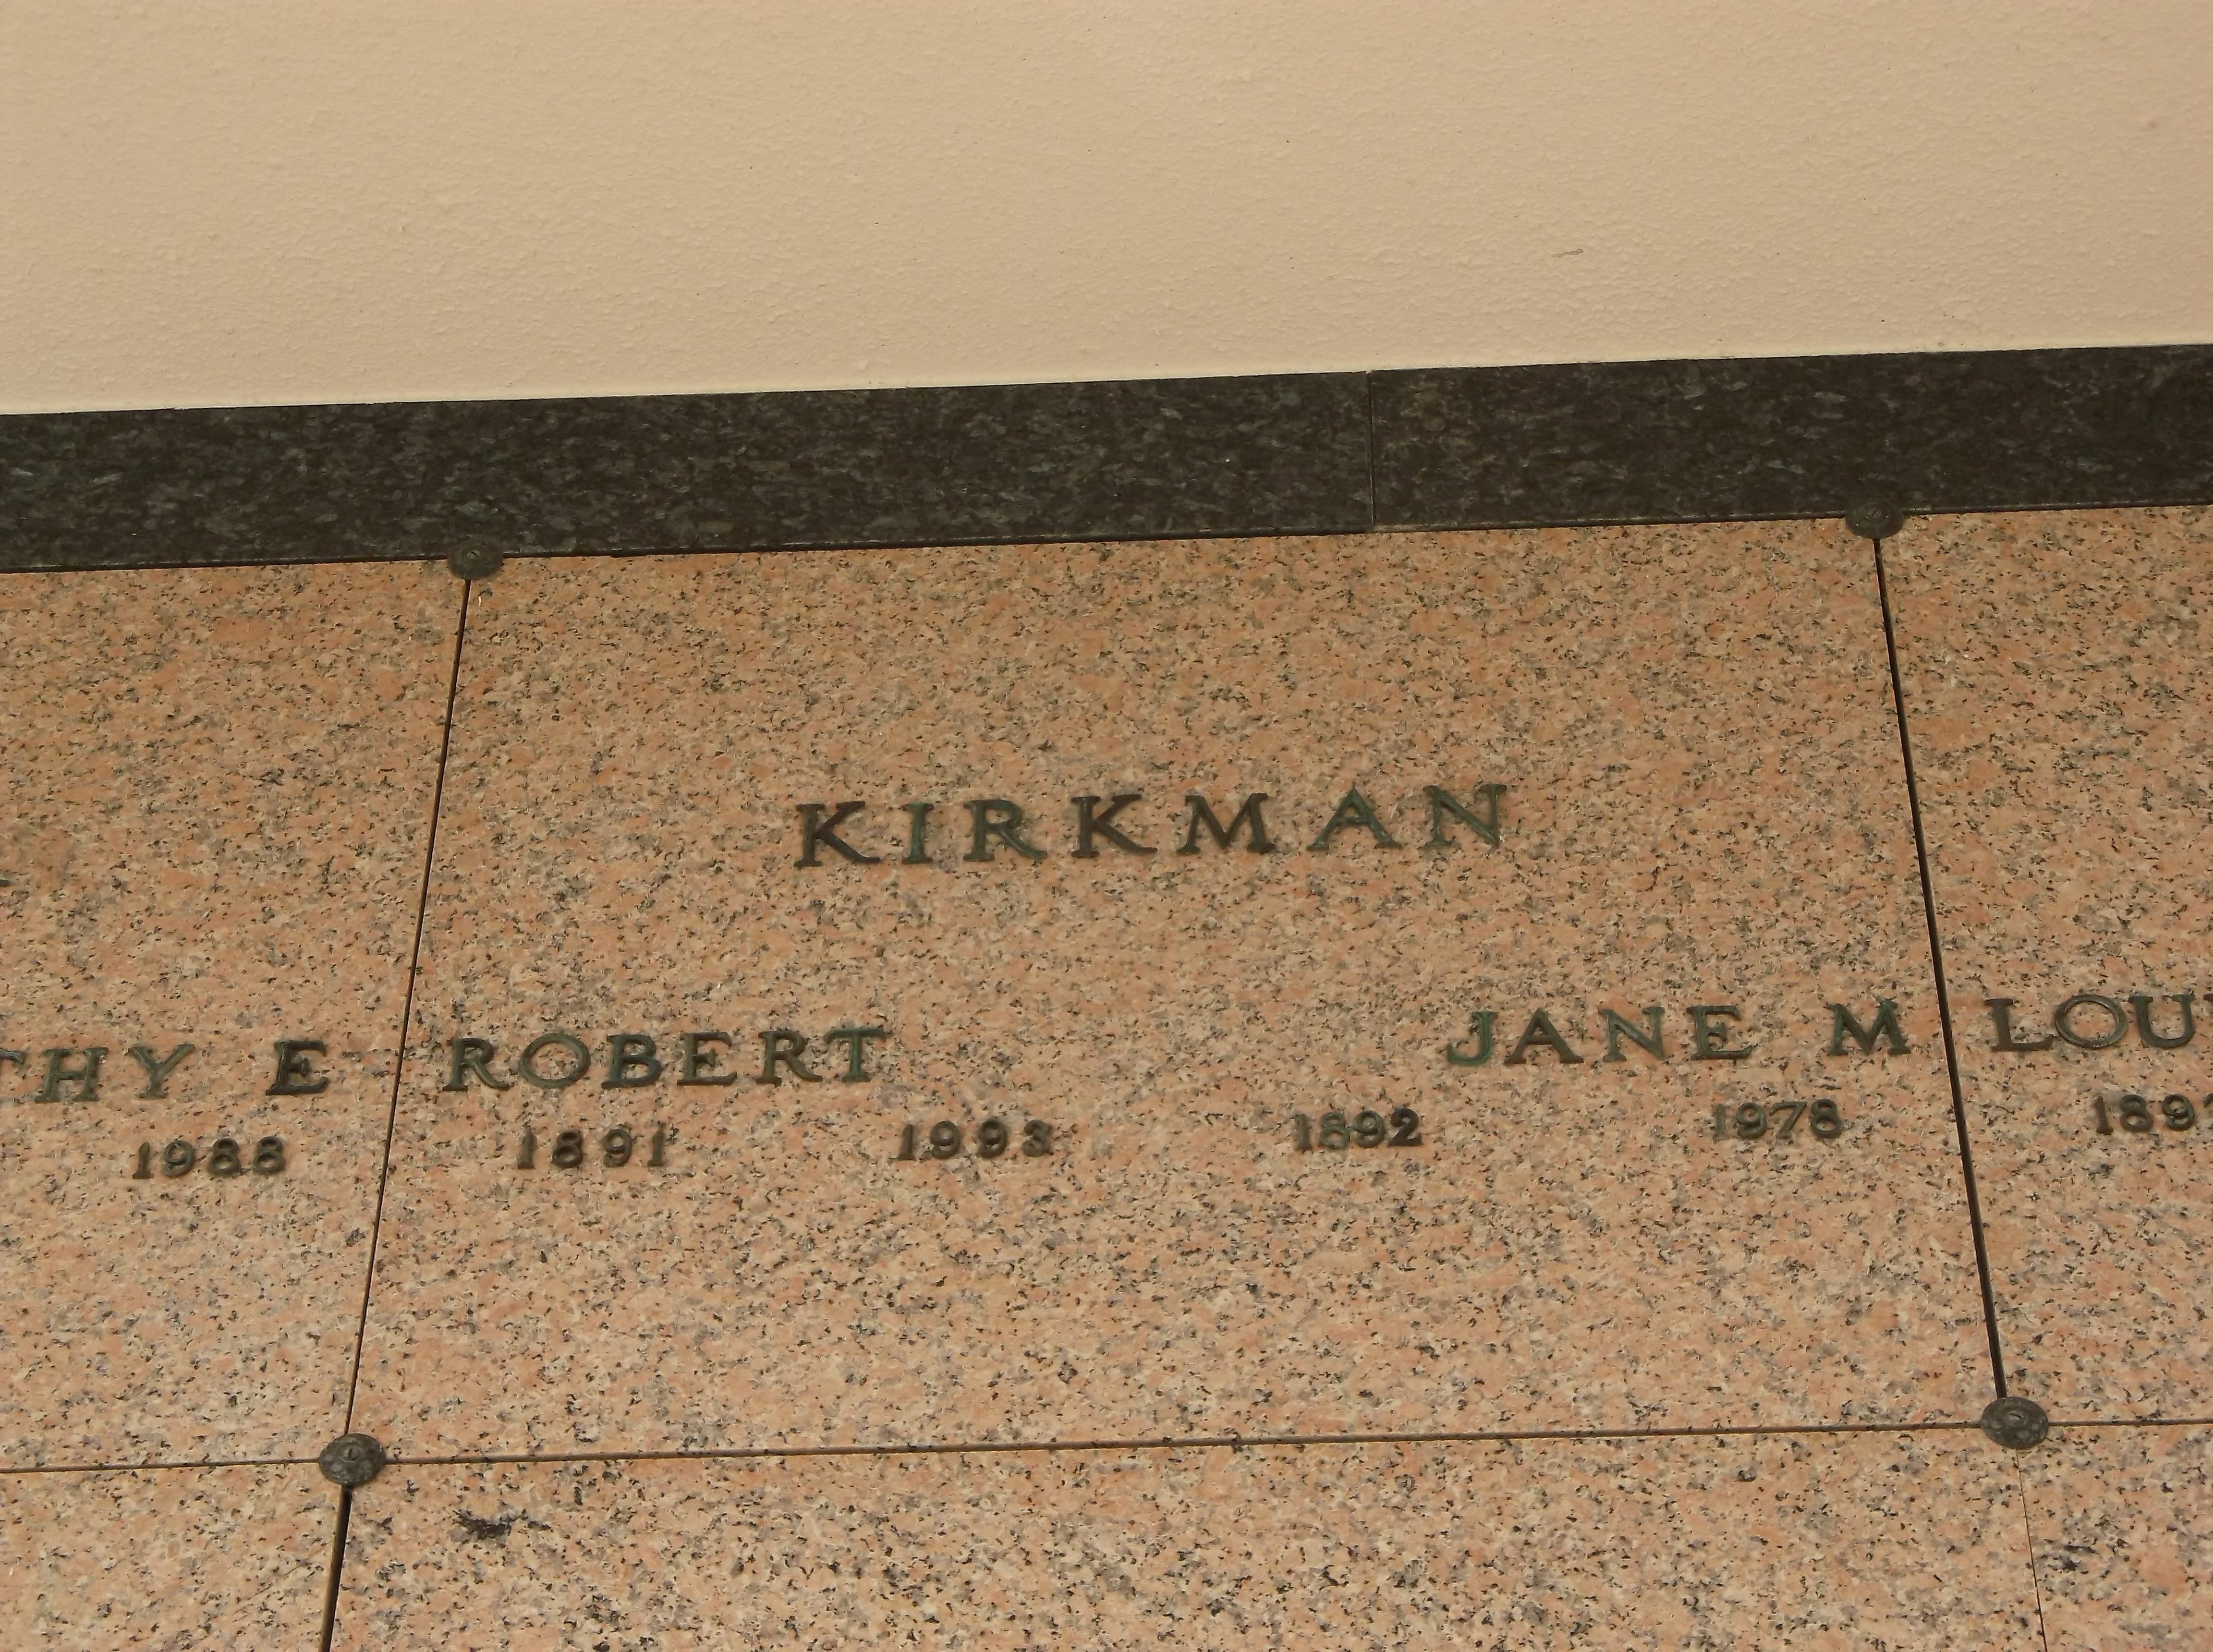 Robert Kirkman